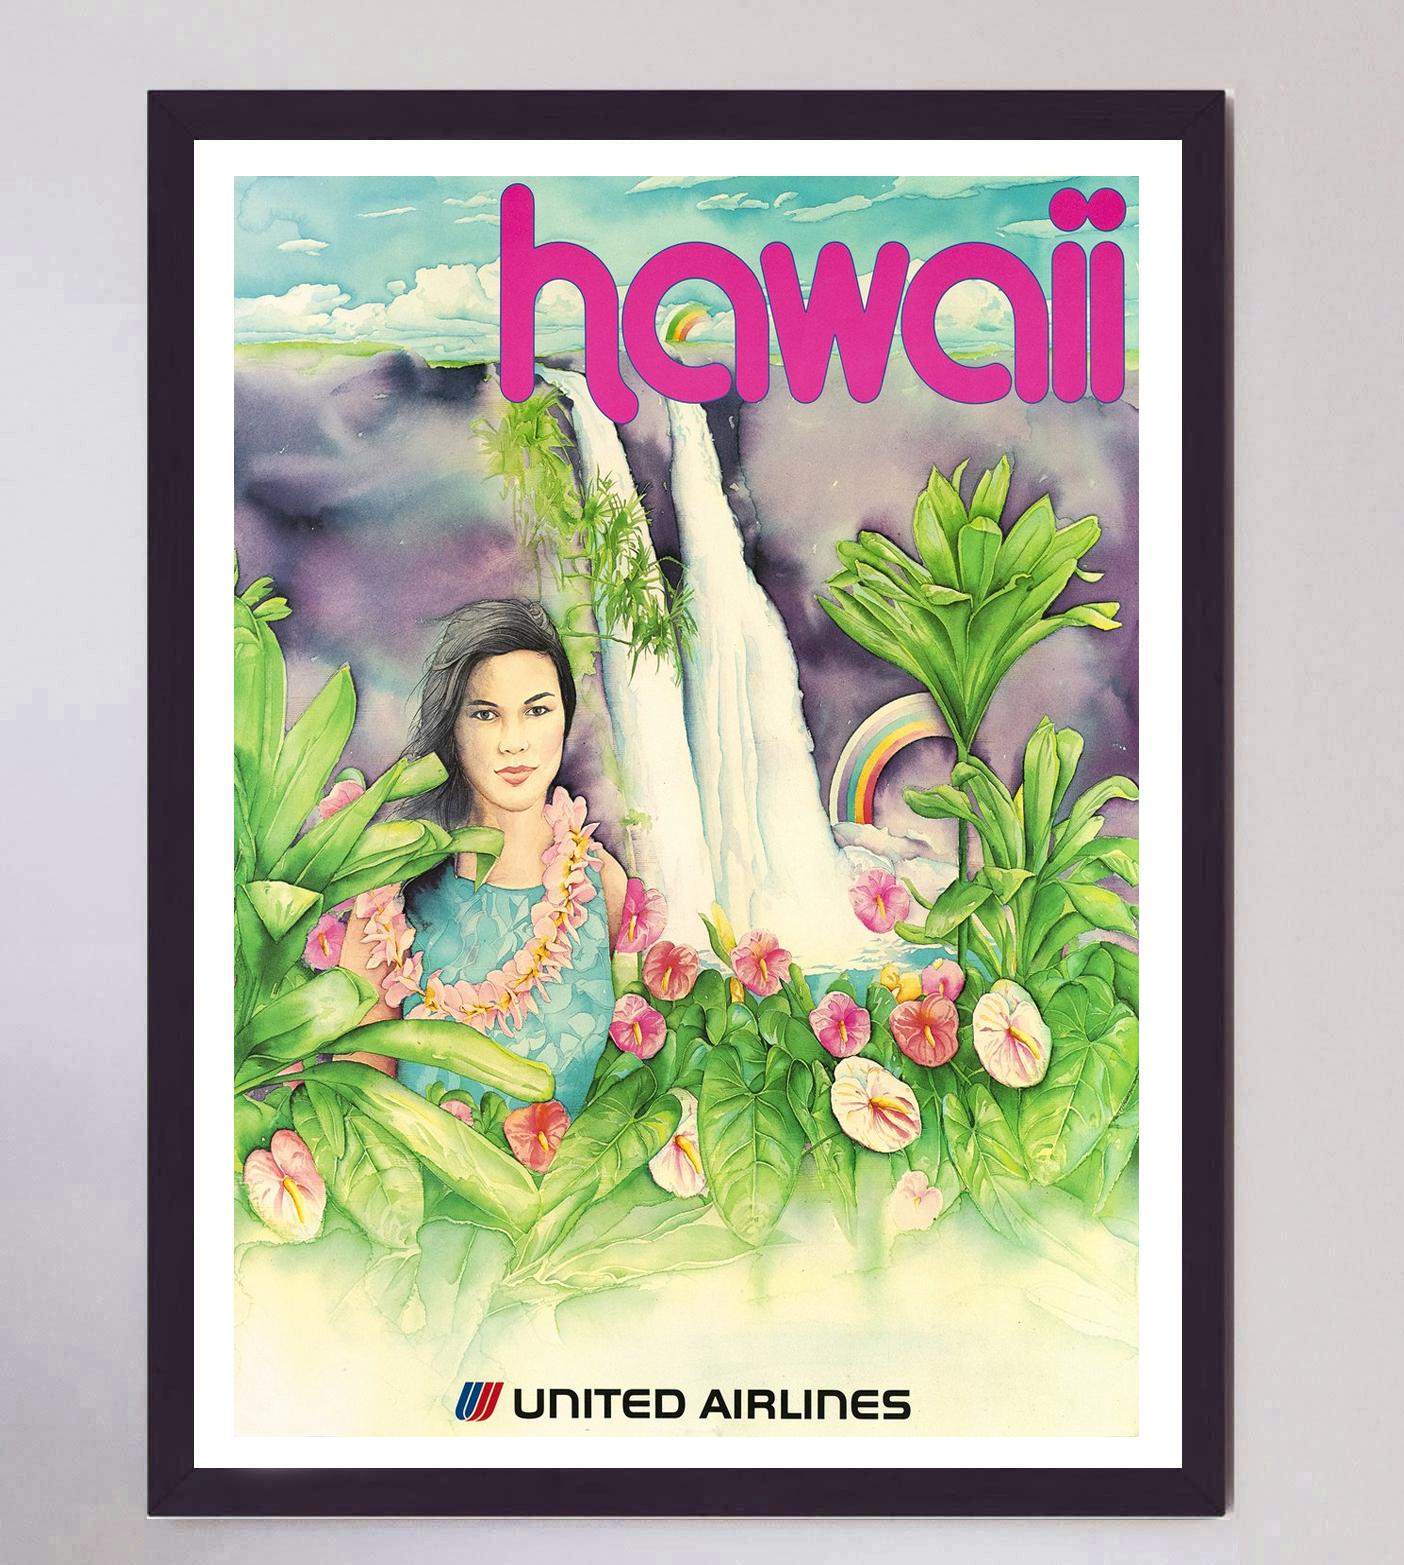 Fin du 20e siècle 1970 United Airlines - Hawaii Original Vintage Poster en vente